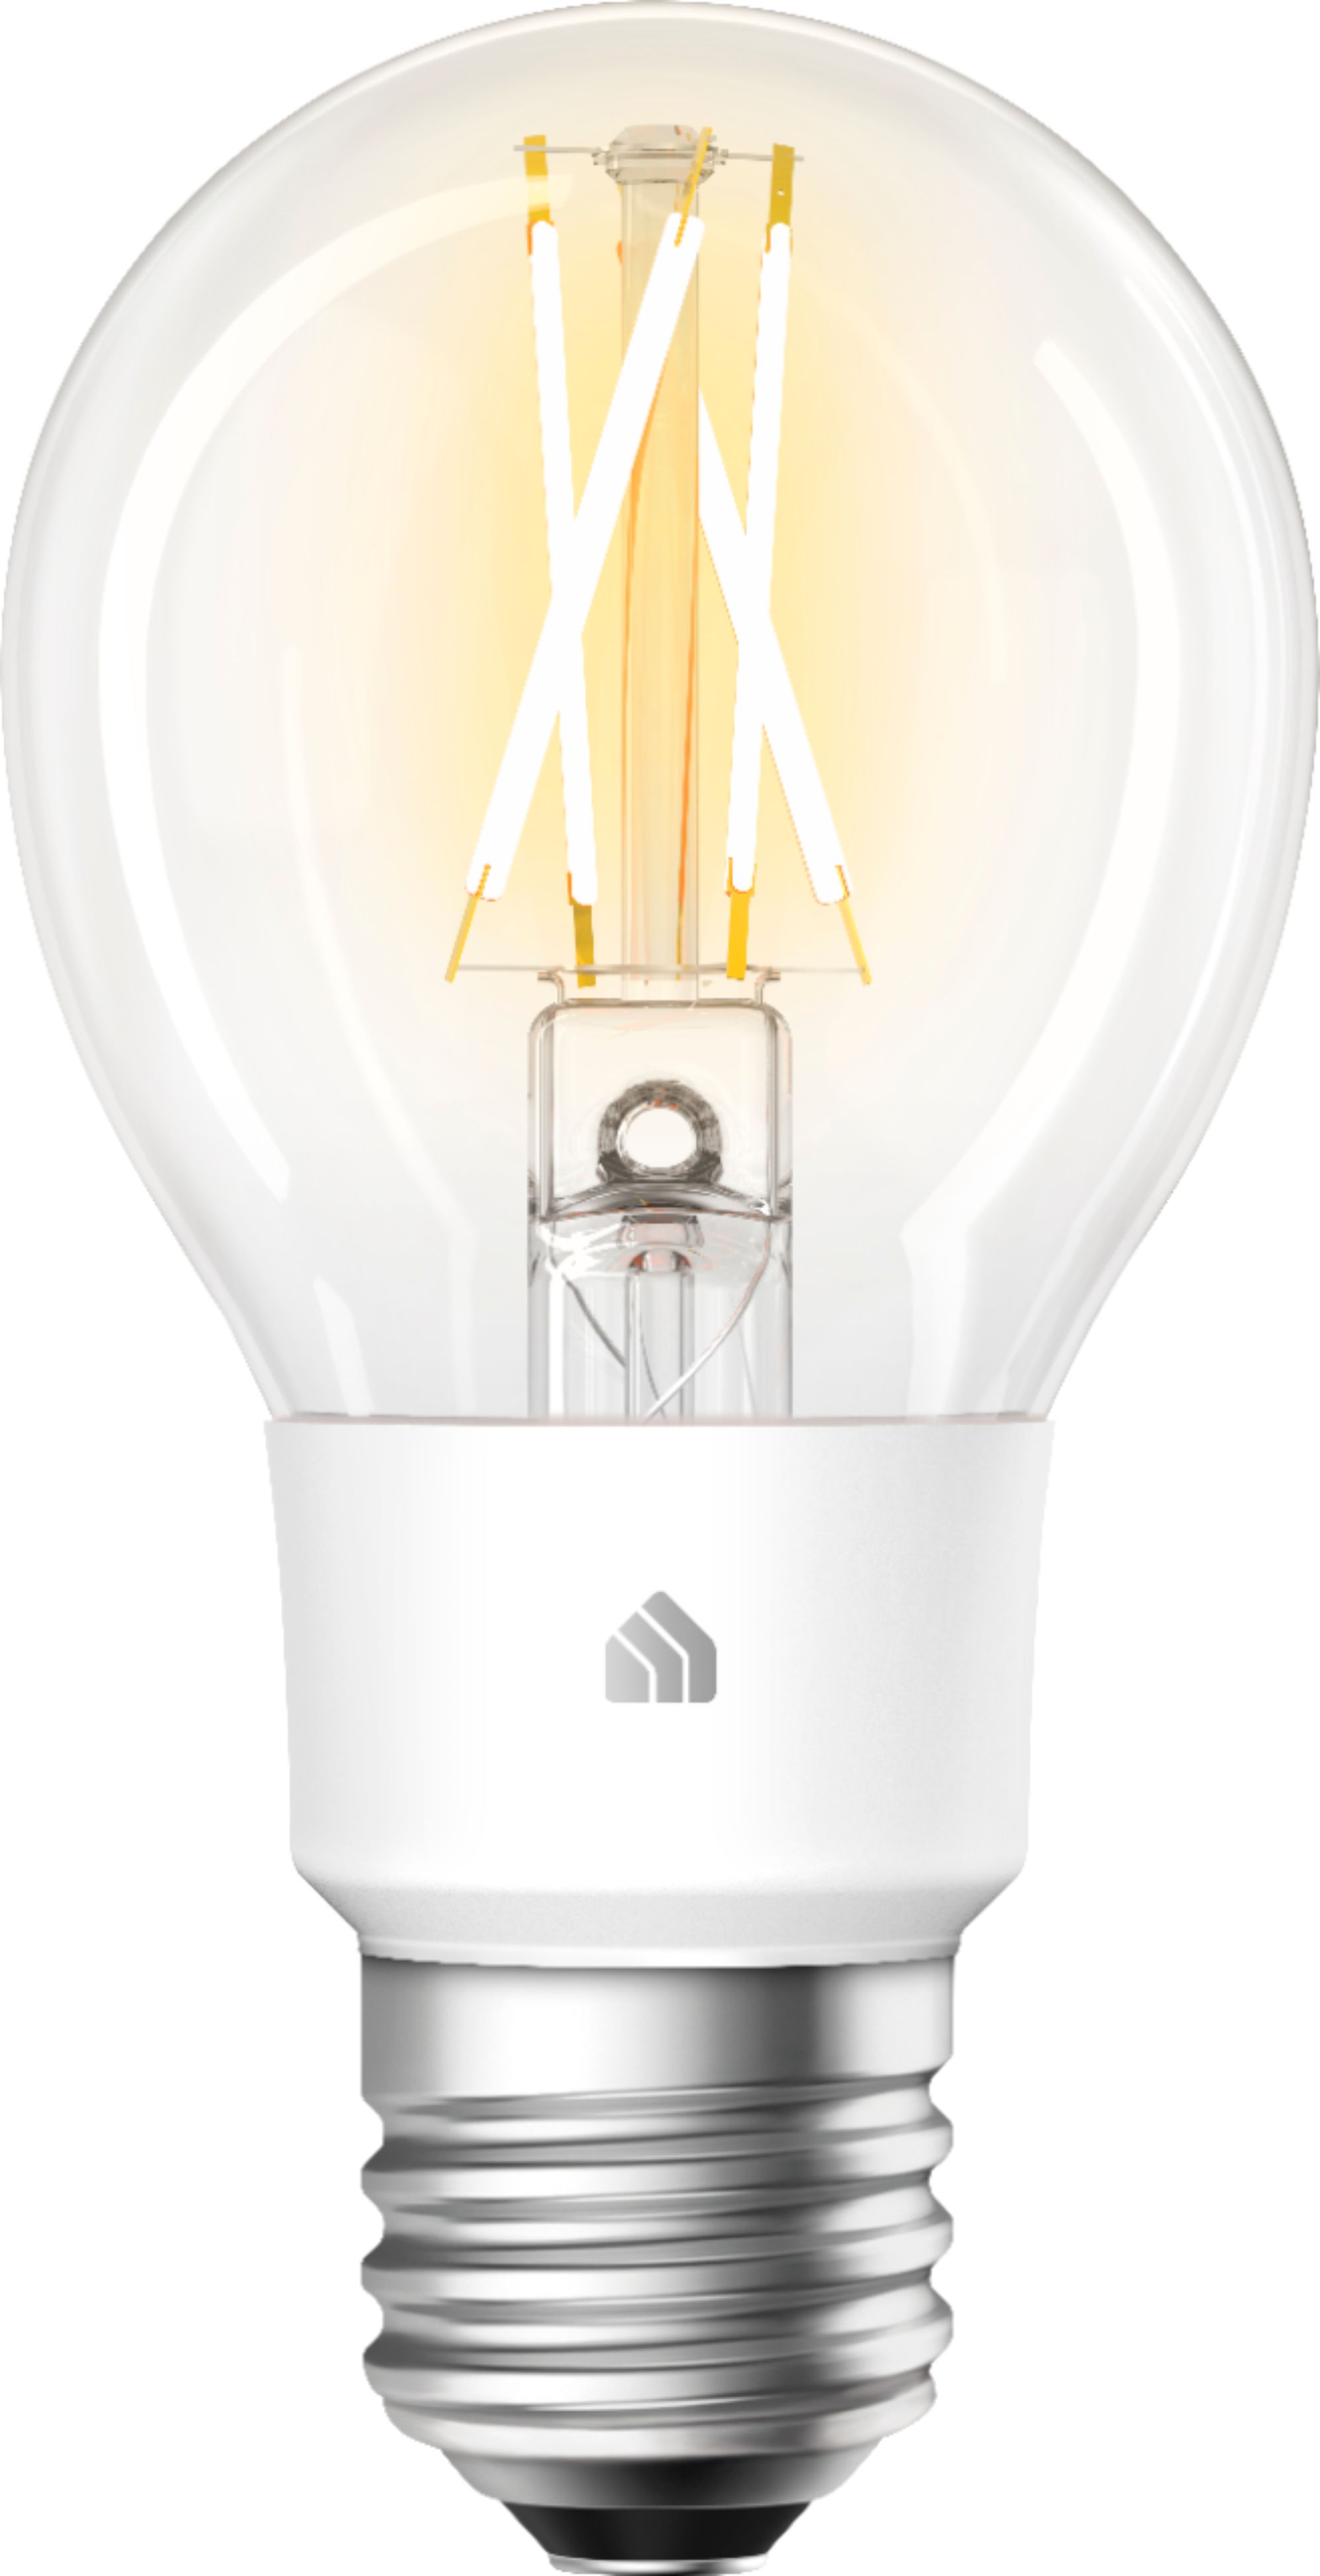 TP-Link - Kasa Smart A19 Wi-Fi Smart LED Light Bulb - Transparent